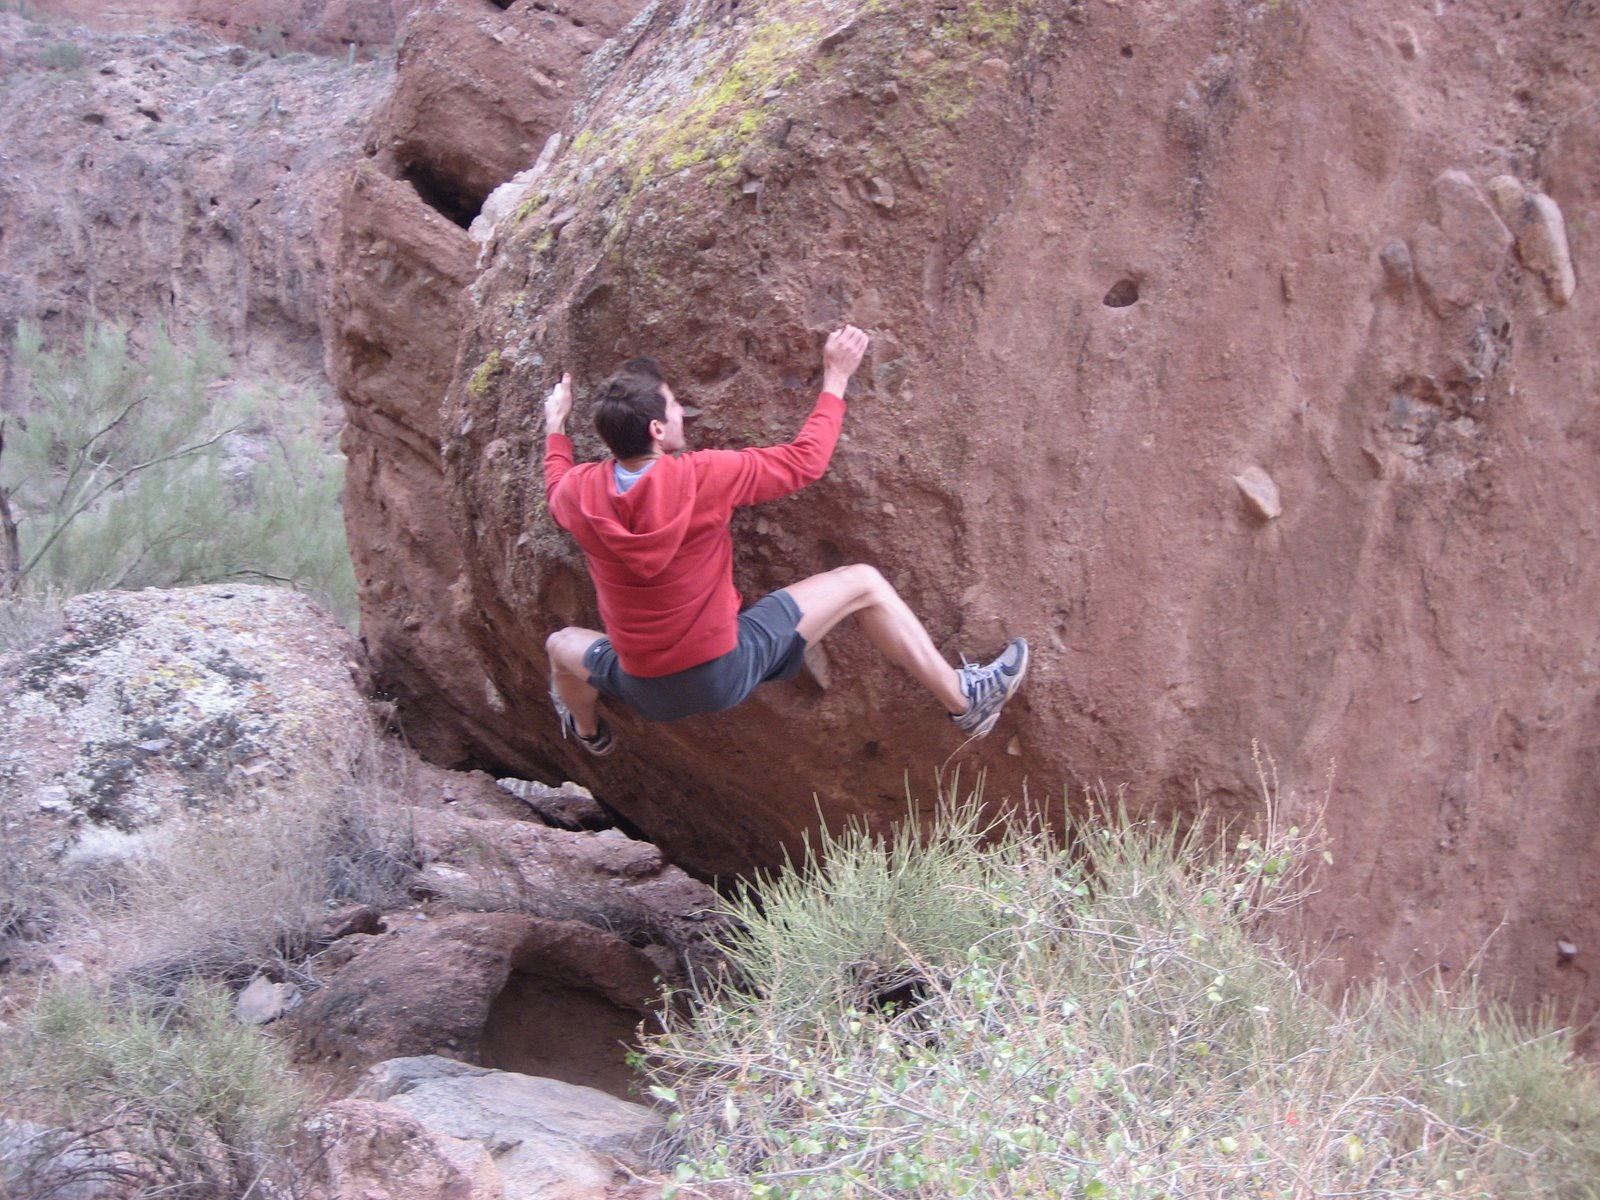  Rick rock climbing in Arizona. 